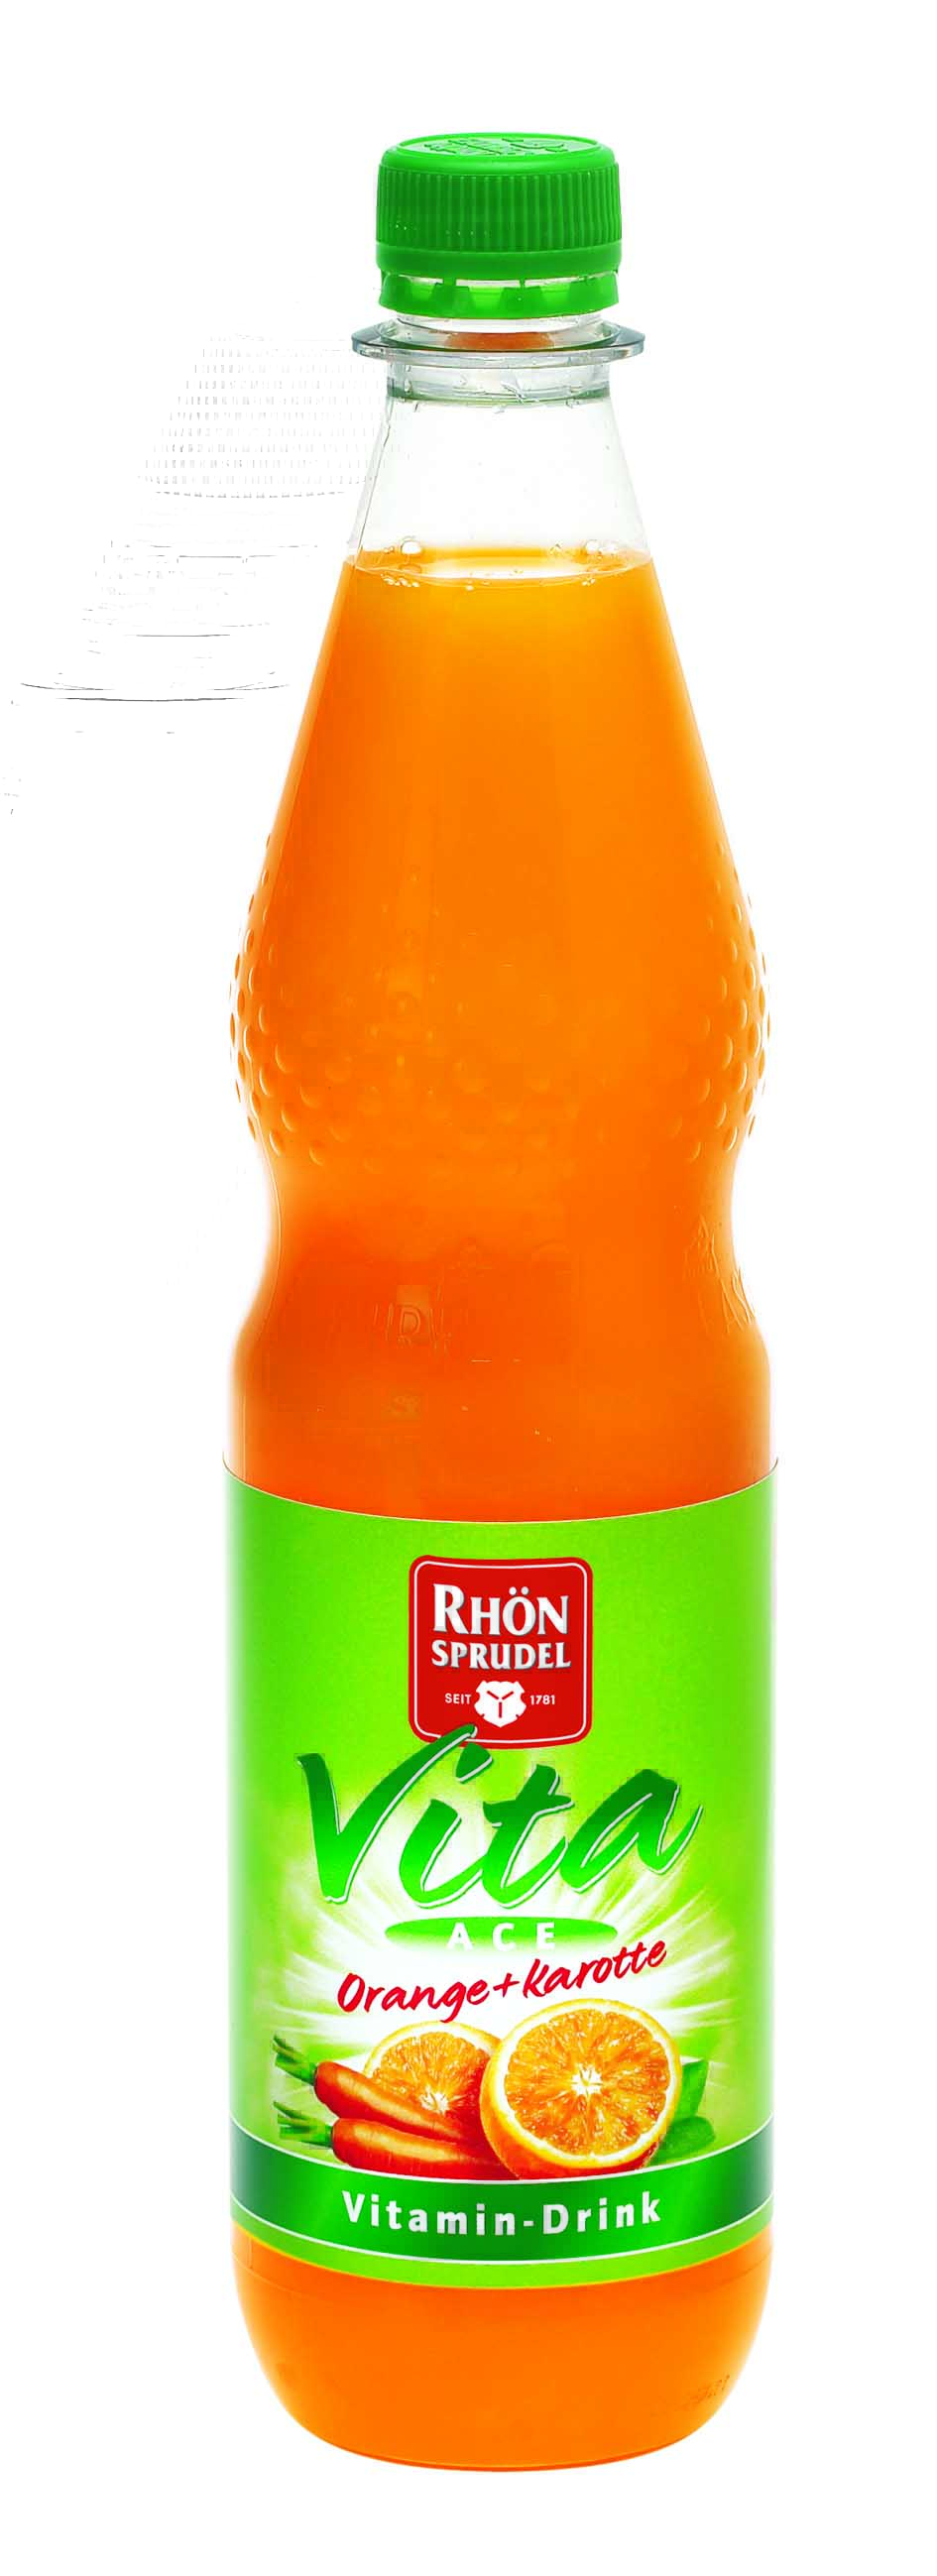 Rhönsprudel Vita ACE Orange-Karotte Vitamin-Drink